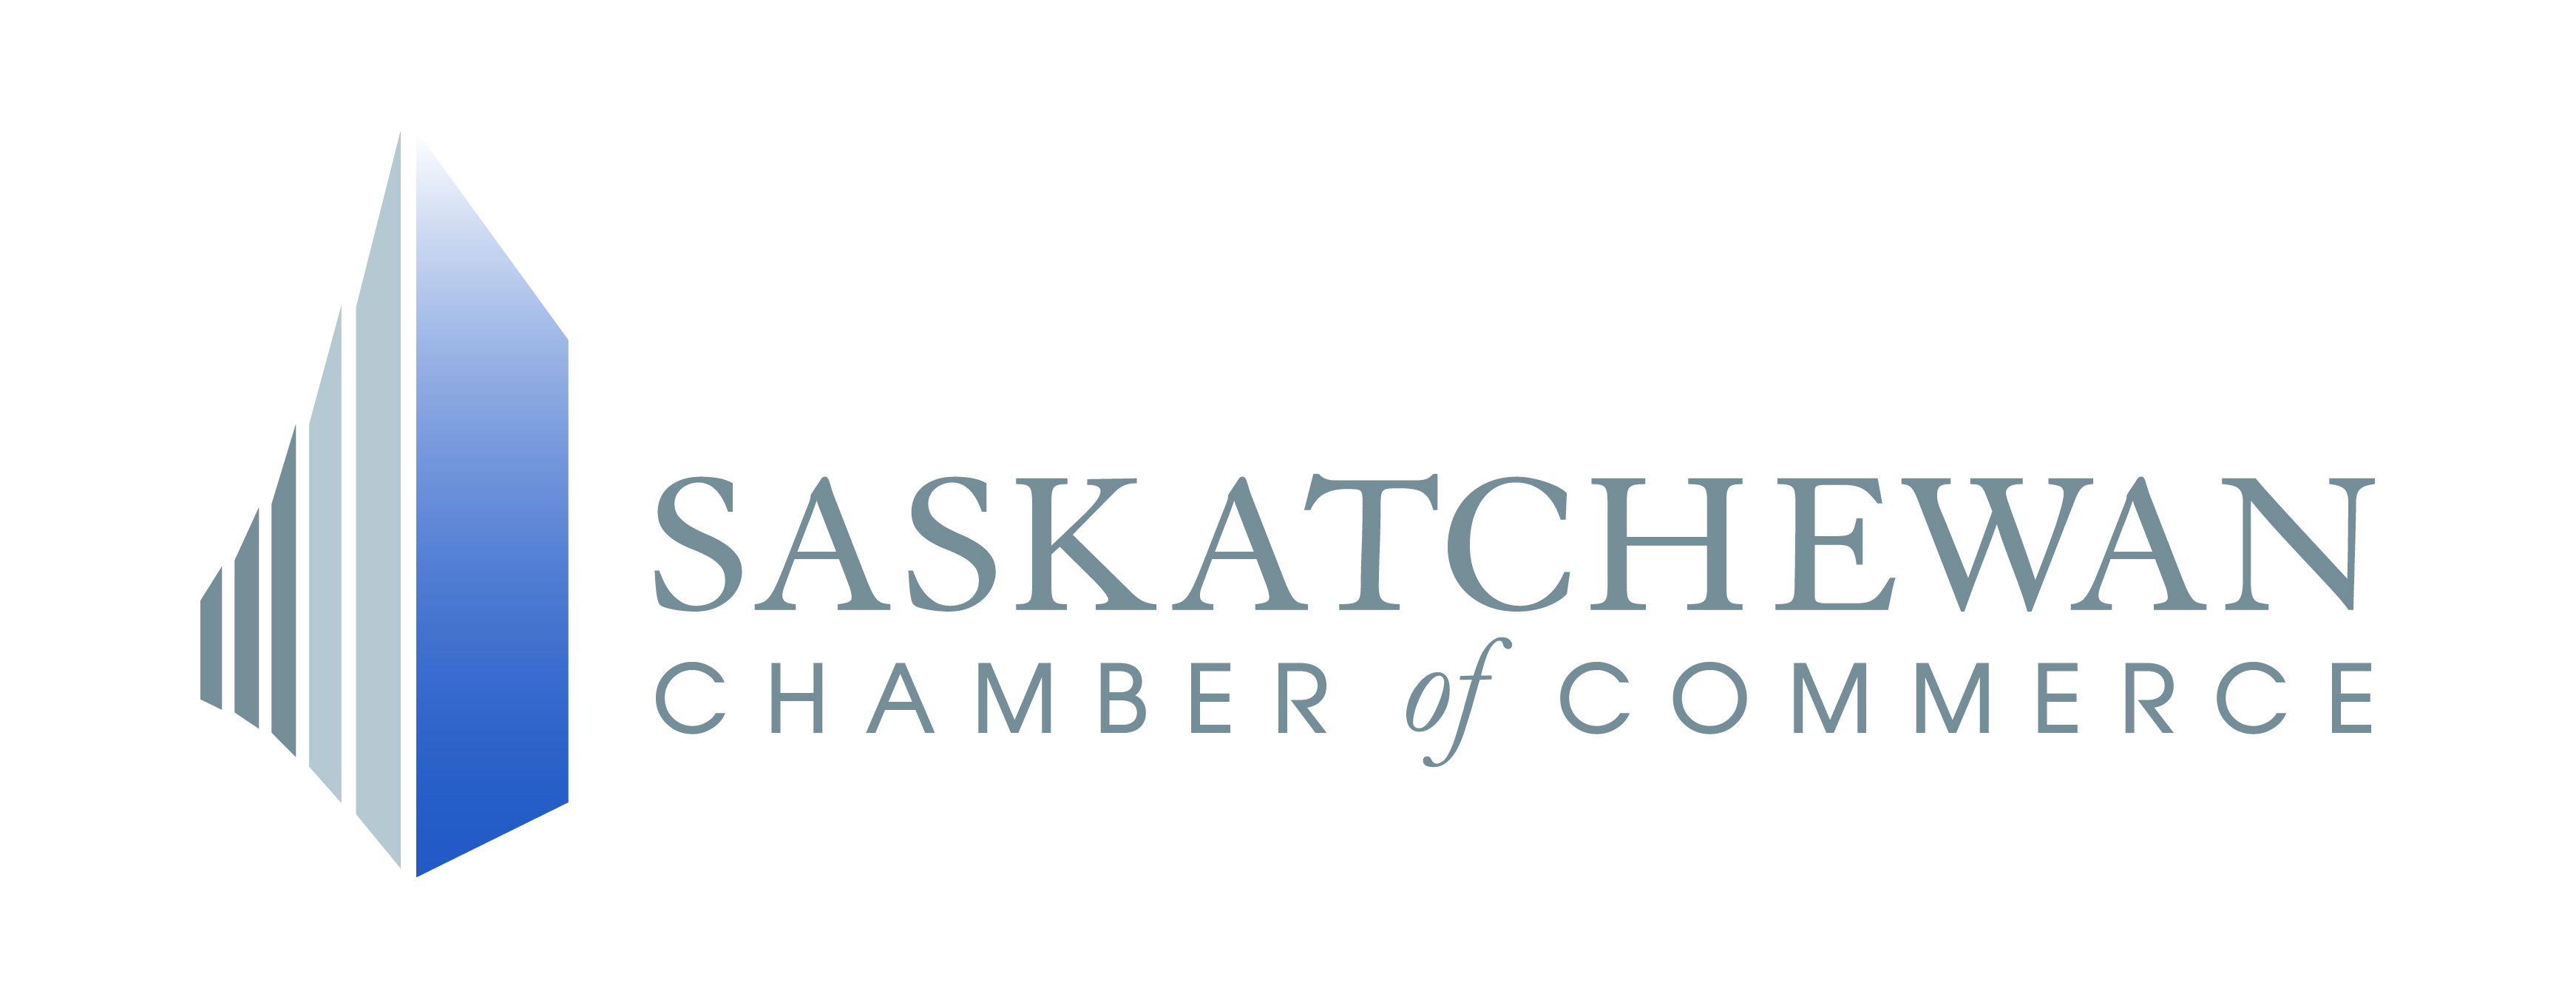 Image for Saskatchewan Chamber of Commerce Undertaking Business Competitiveness Study